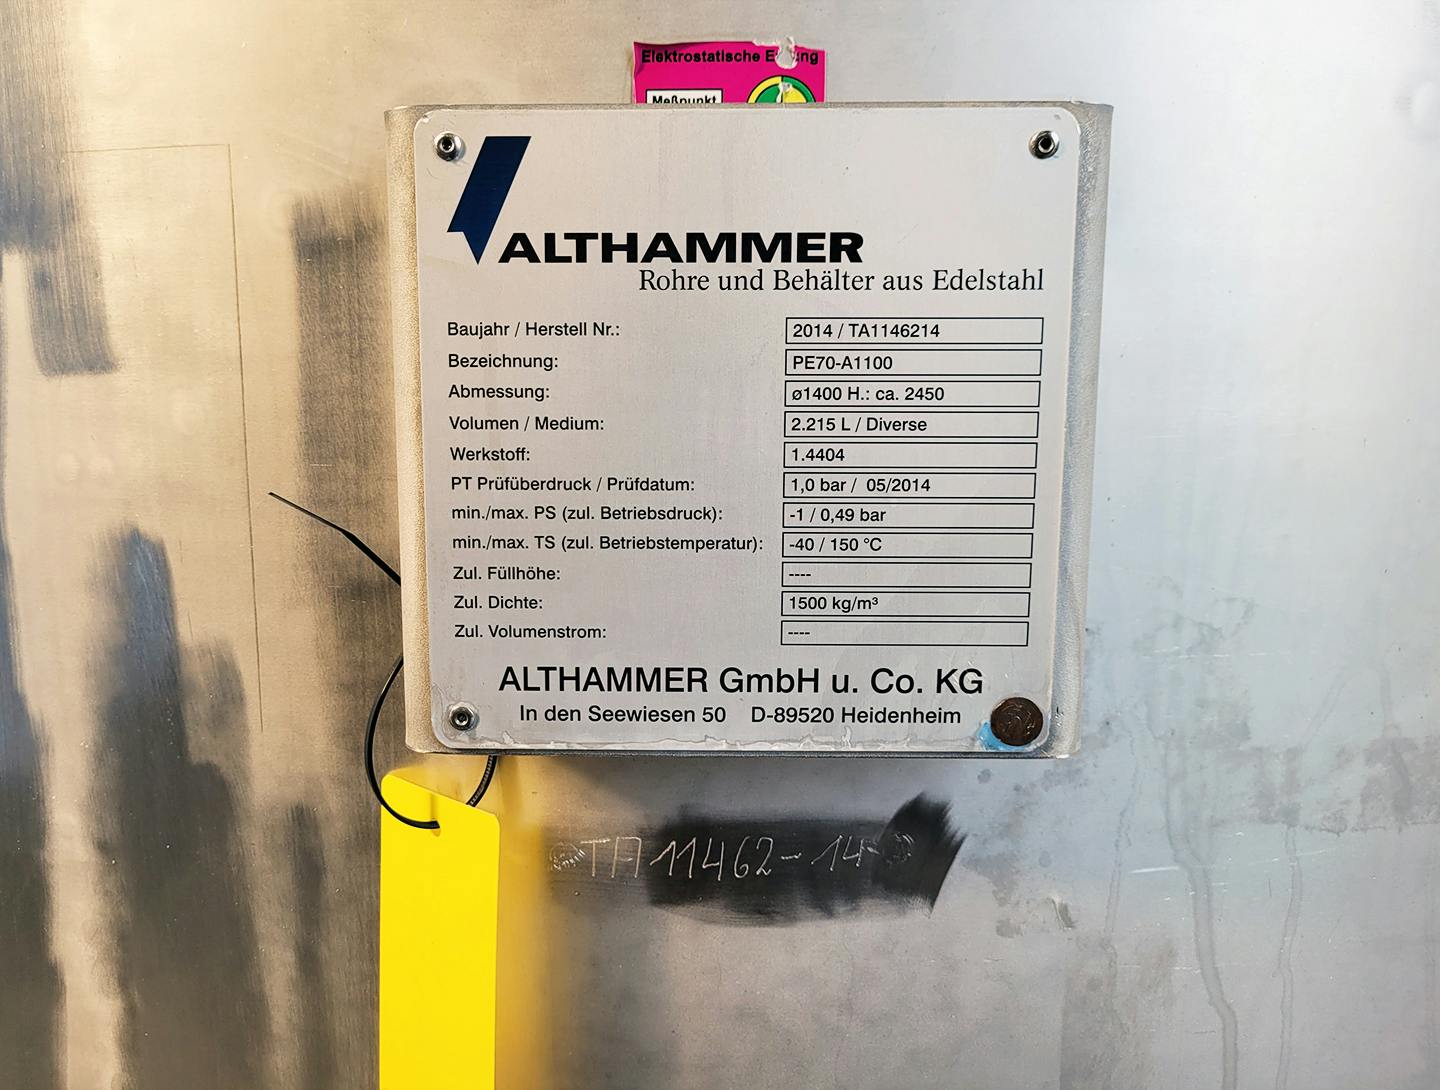 Althammer - Zbiornik pionowy - image 6